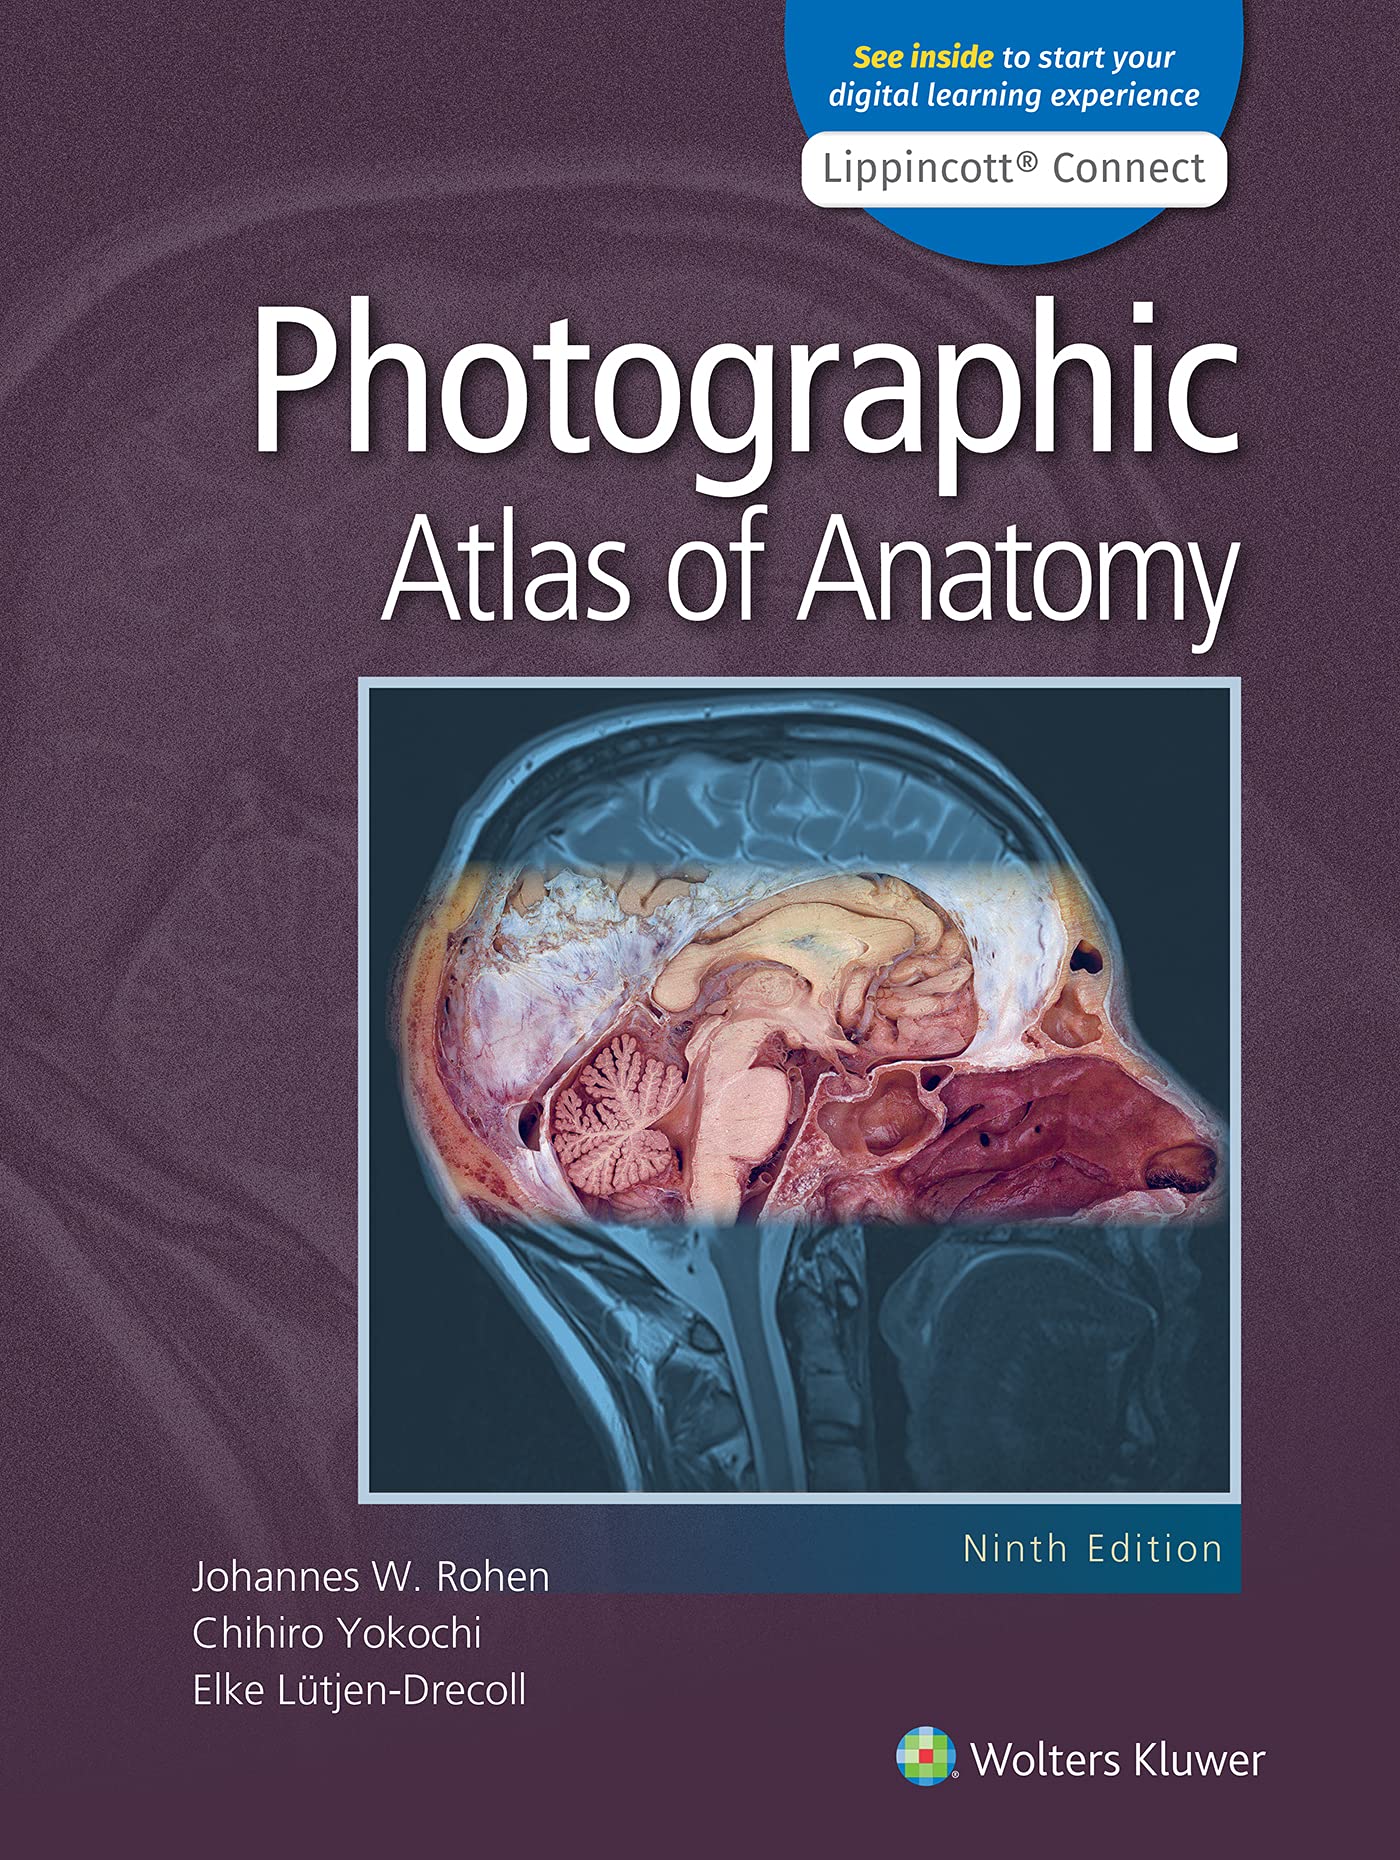 ANATOMY A PHOTOGRAPHIC ATLAS 9TH EDITION PDF Free Download